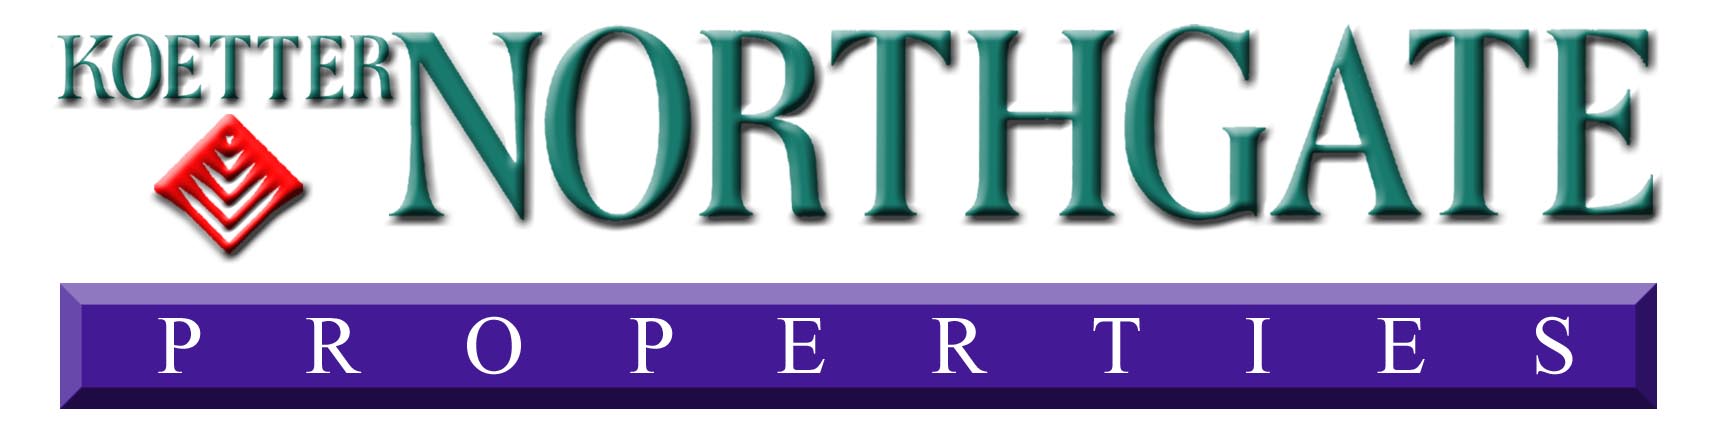 Koetter Northgate Properties, LLC